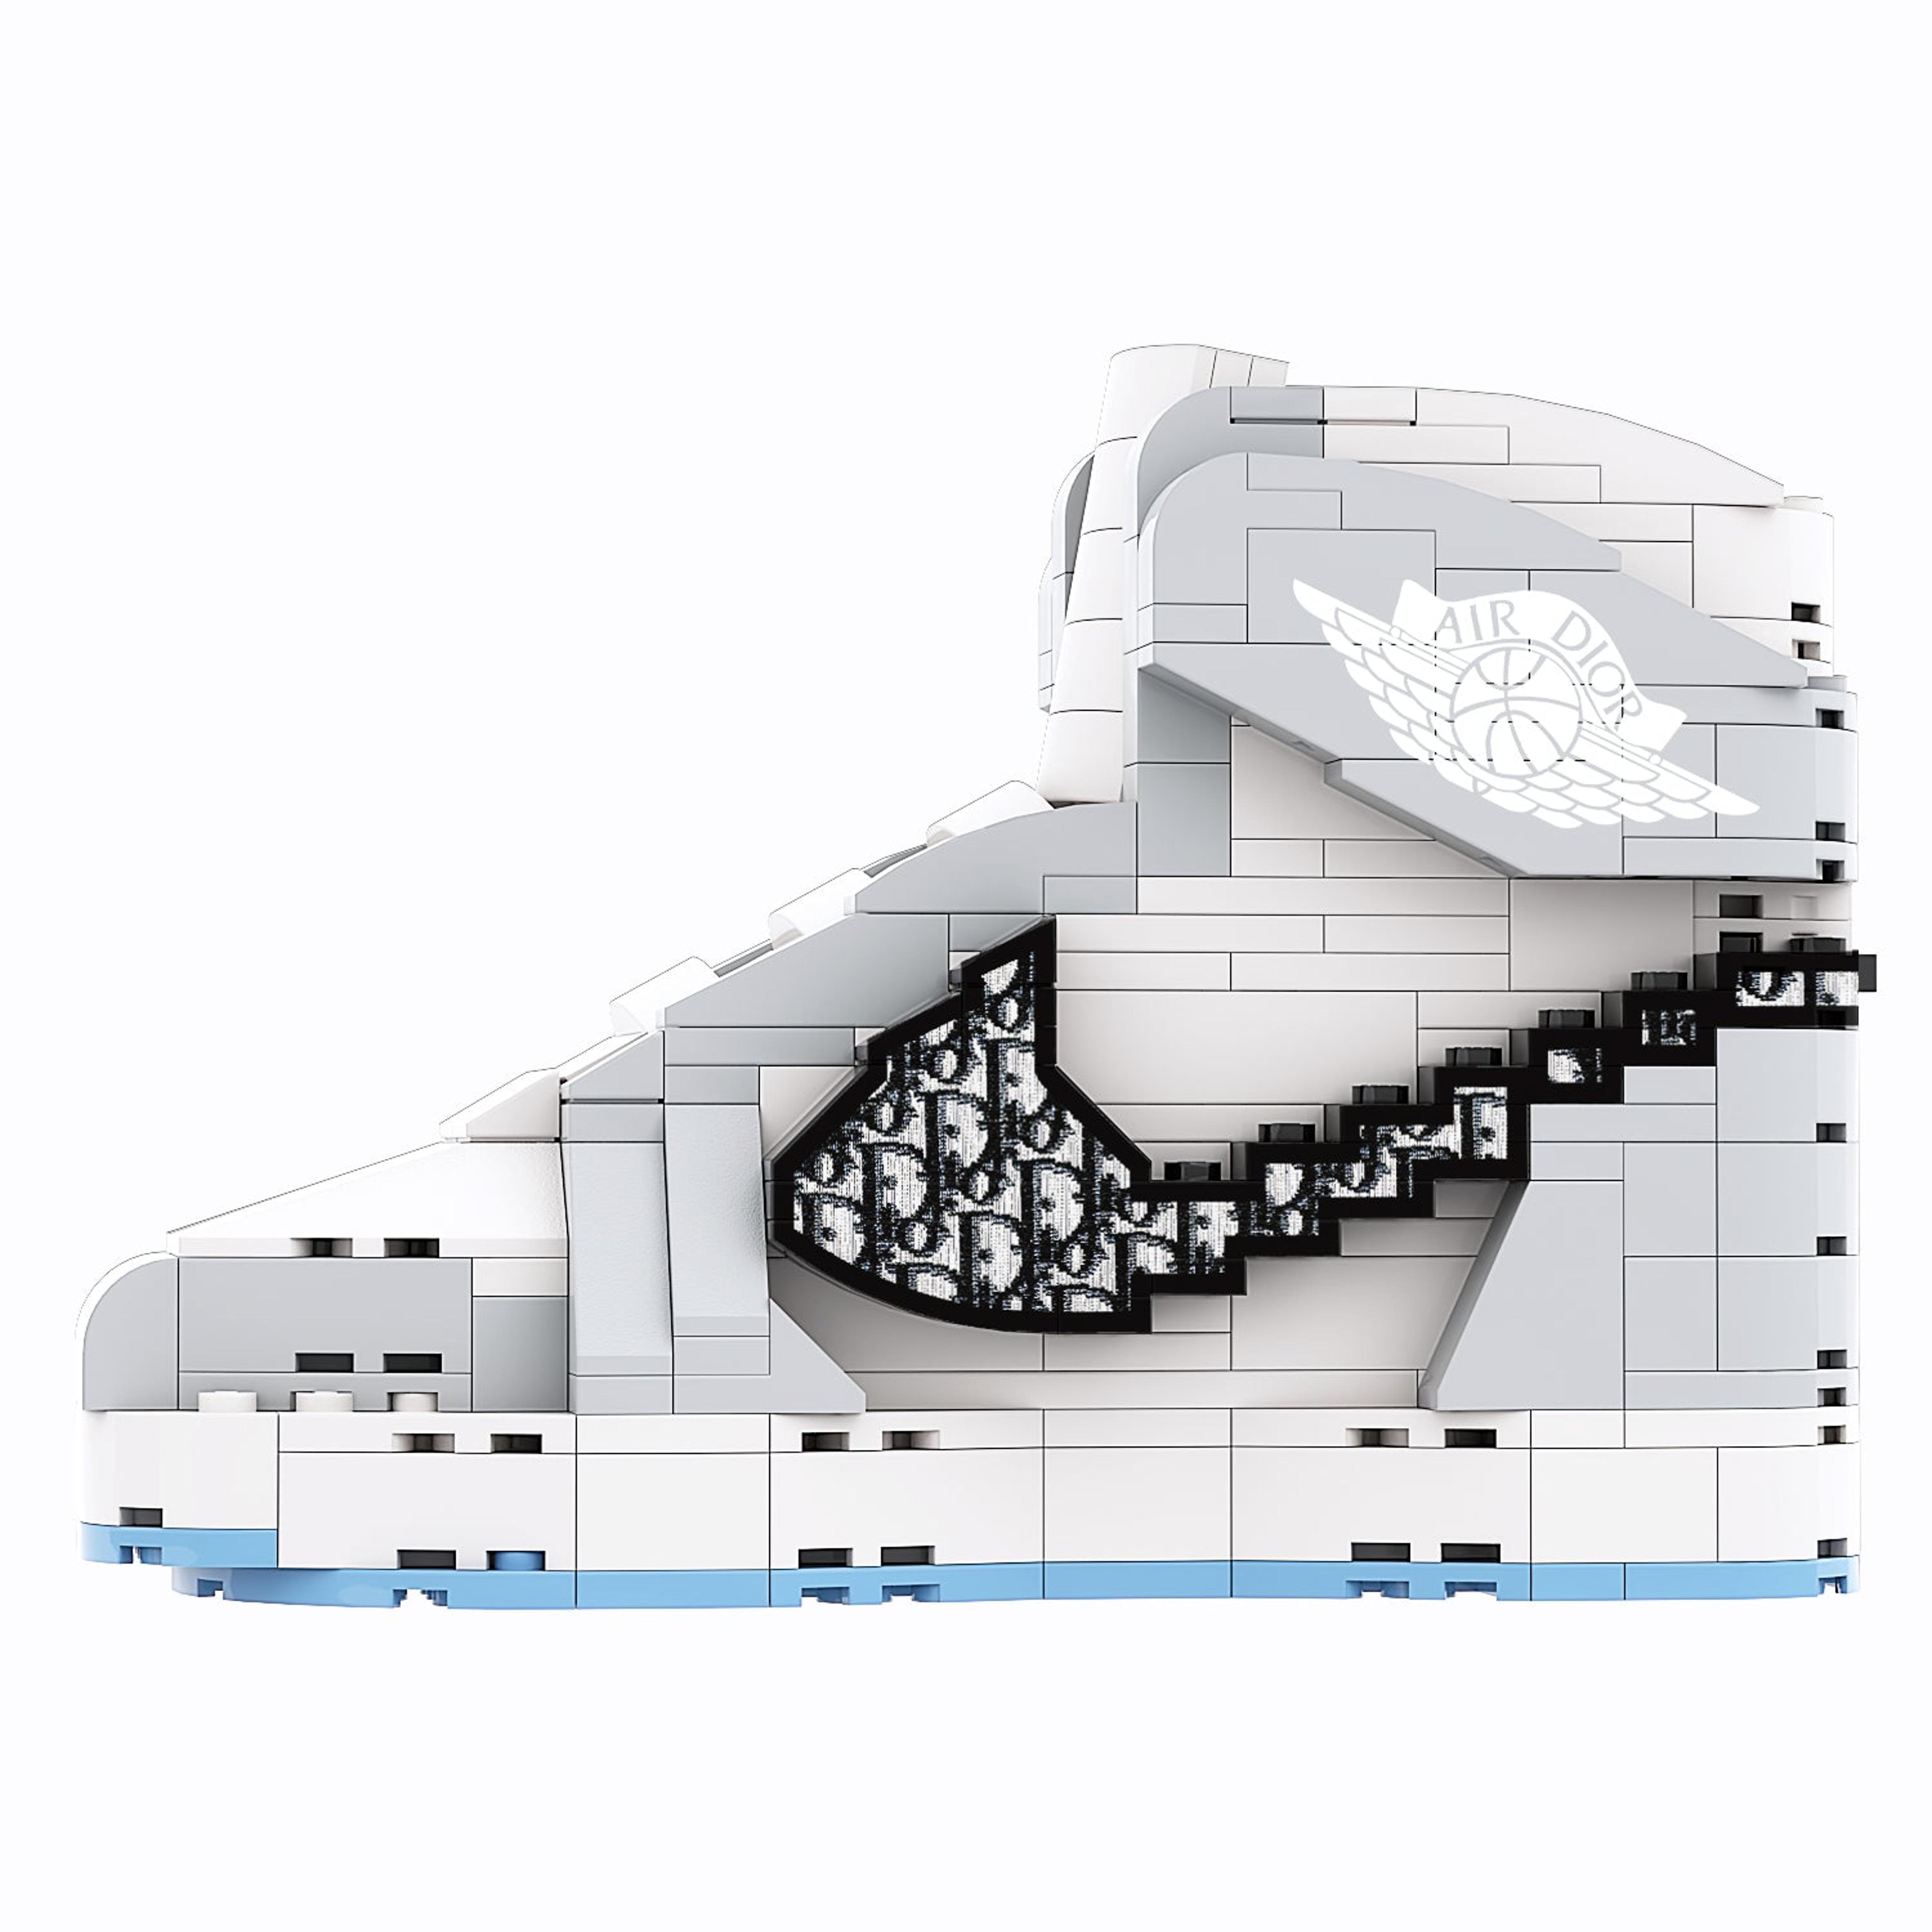 Alternate View 1 of REGULAR "AJ1 Dior High" Sneaker Bricks with Mini Figure